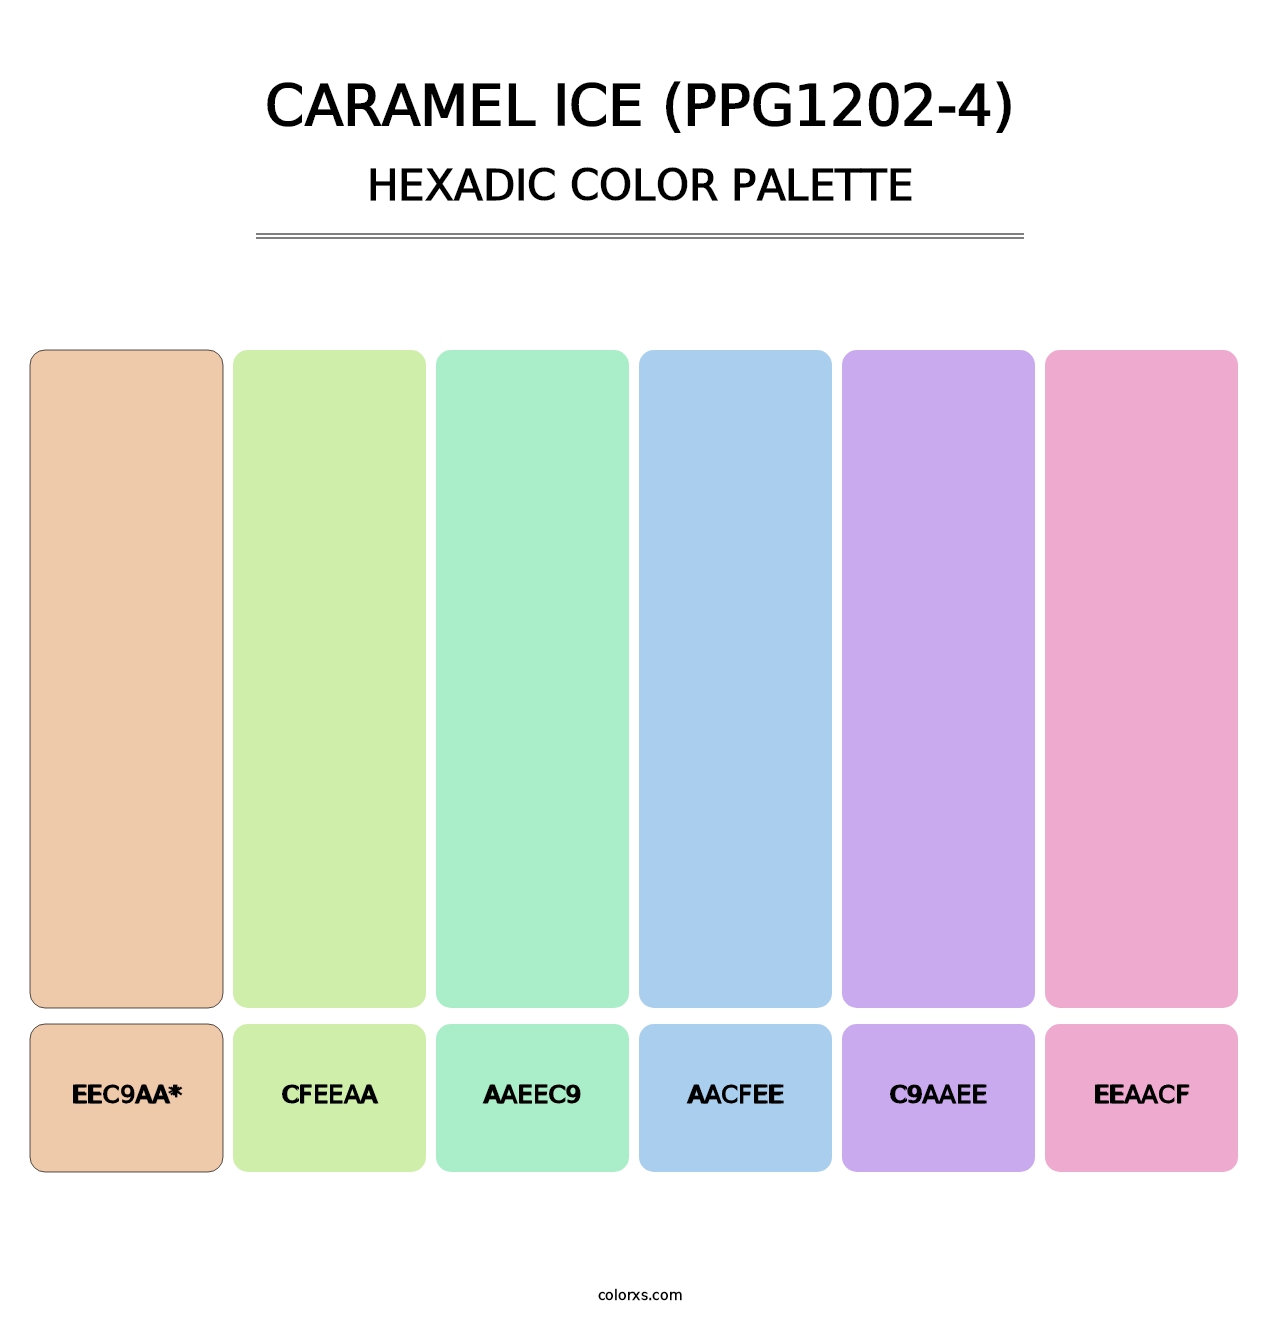 Caramel Ice (PPG1202-4) - Hexadic Color Palette